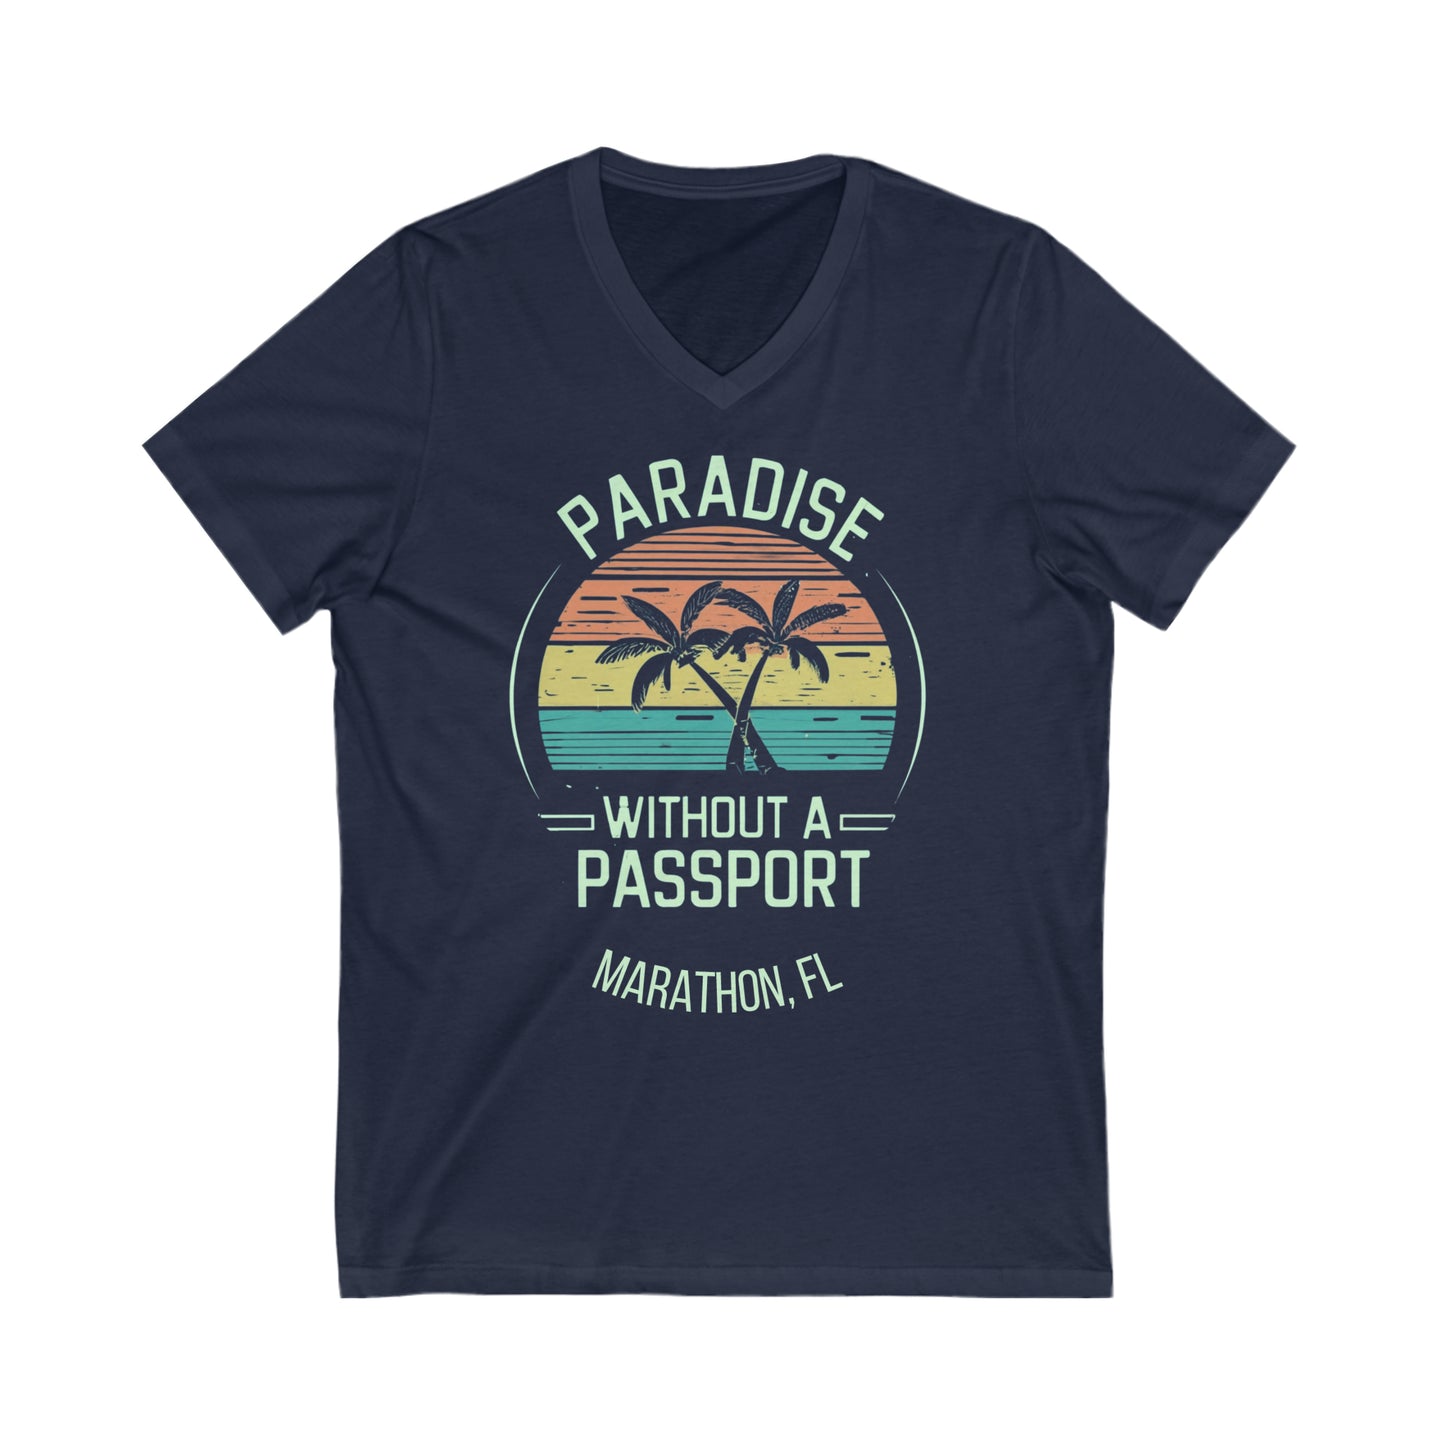 Paradise without a passport vintage -  vneck tee - marathon florida vneck - womens or mens